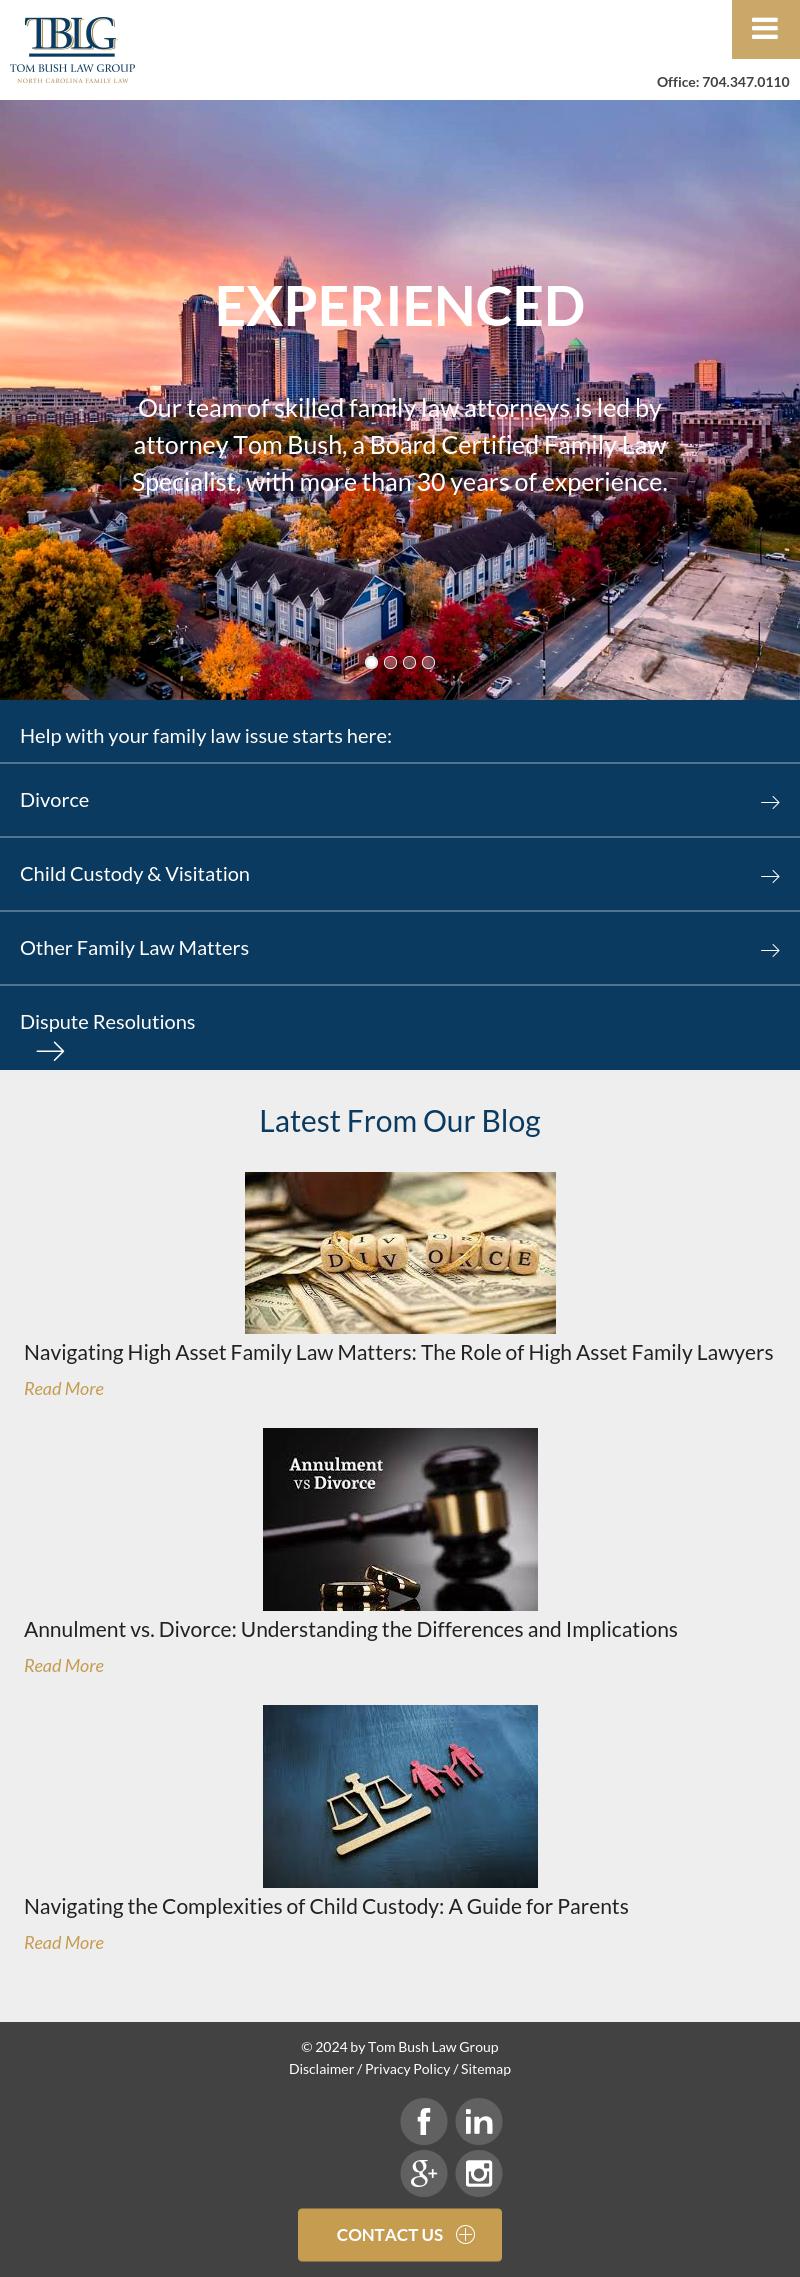 Tom Bush Law Group - Charlotte NC Lawyers